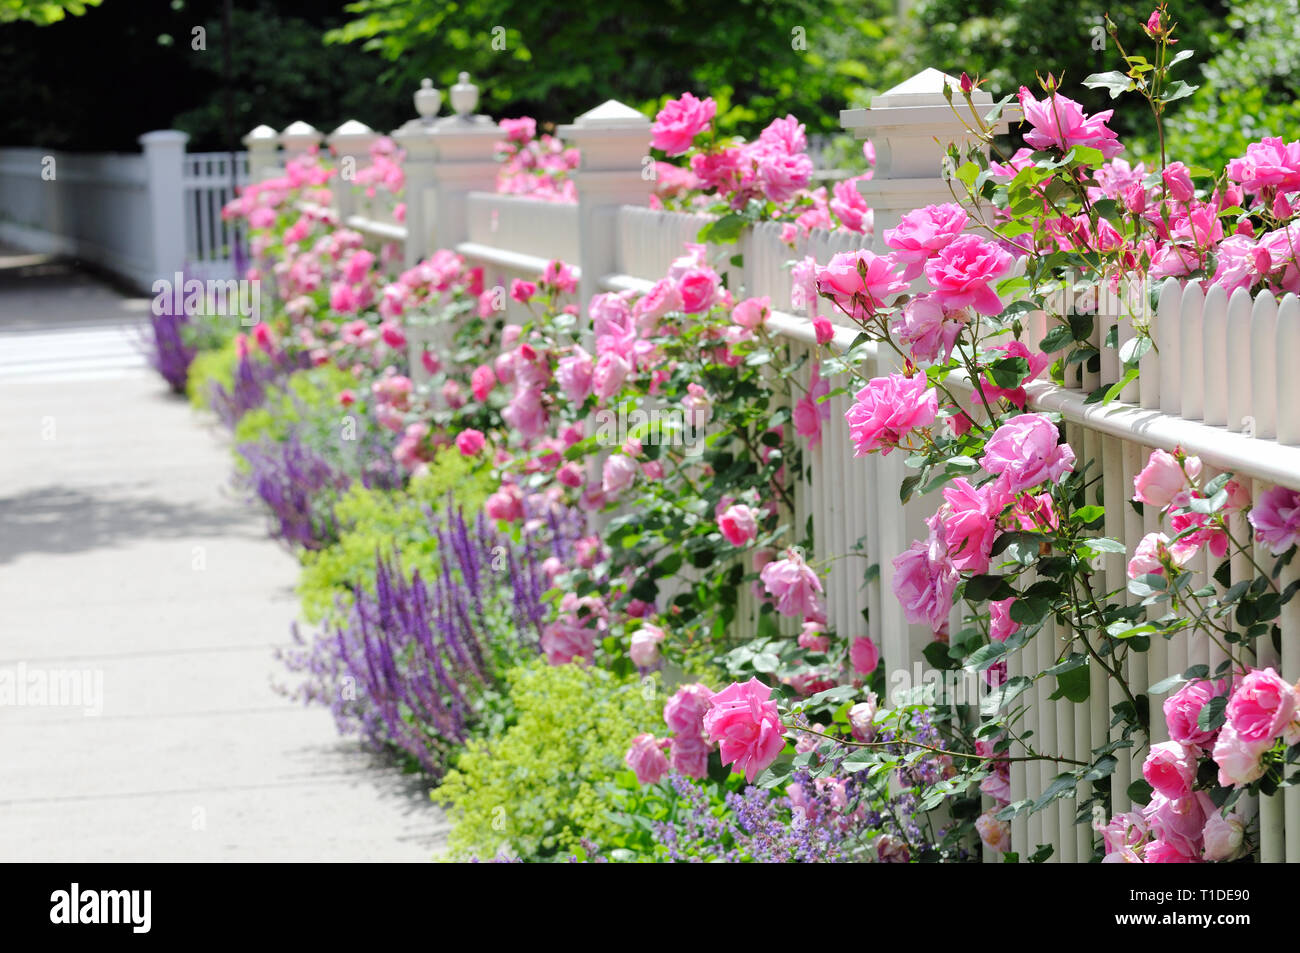 Weißen Holzzaun, rosa Rosen, farbenfrohen Garten Grenze hinzufügen Kandareanklang zu Hause Eingang Stockfoto